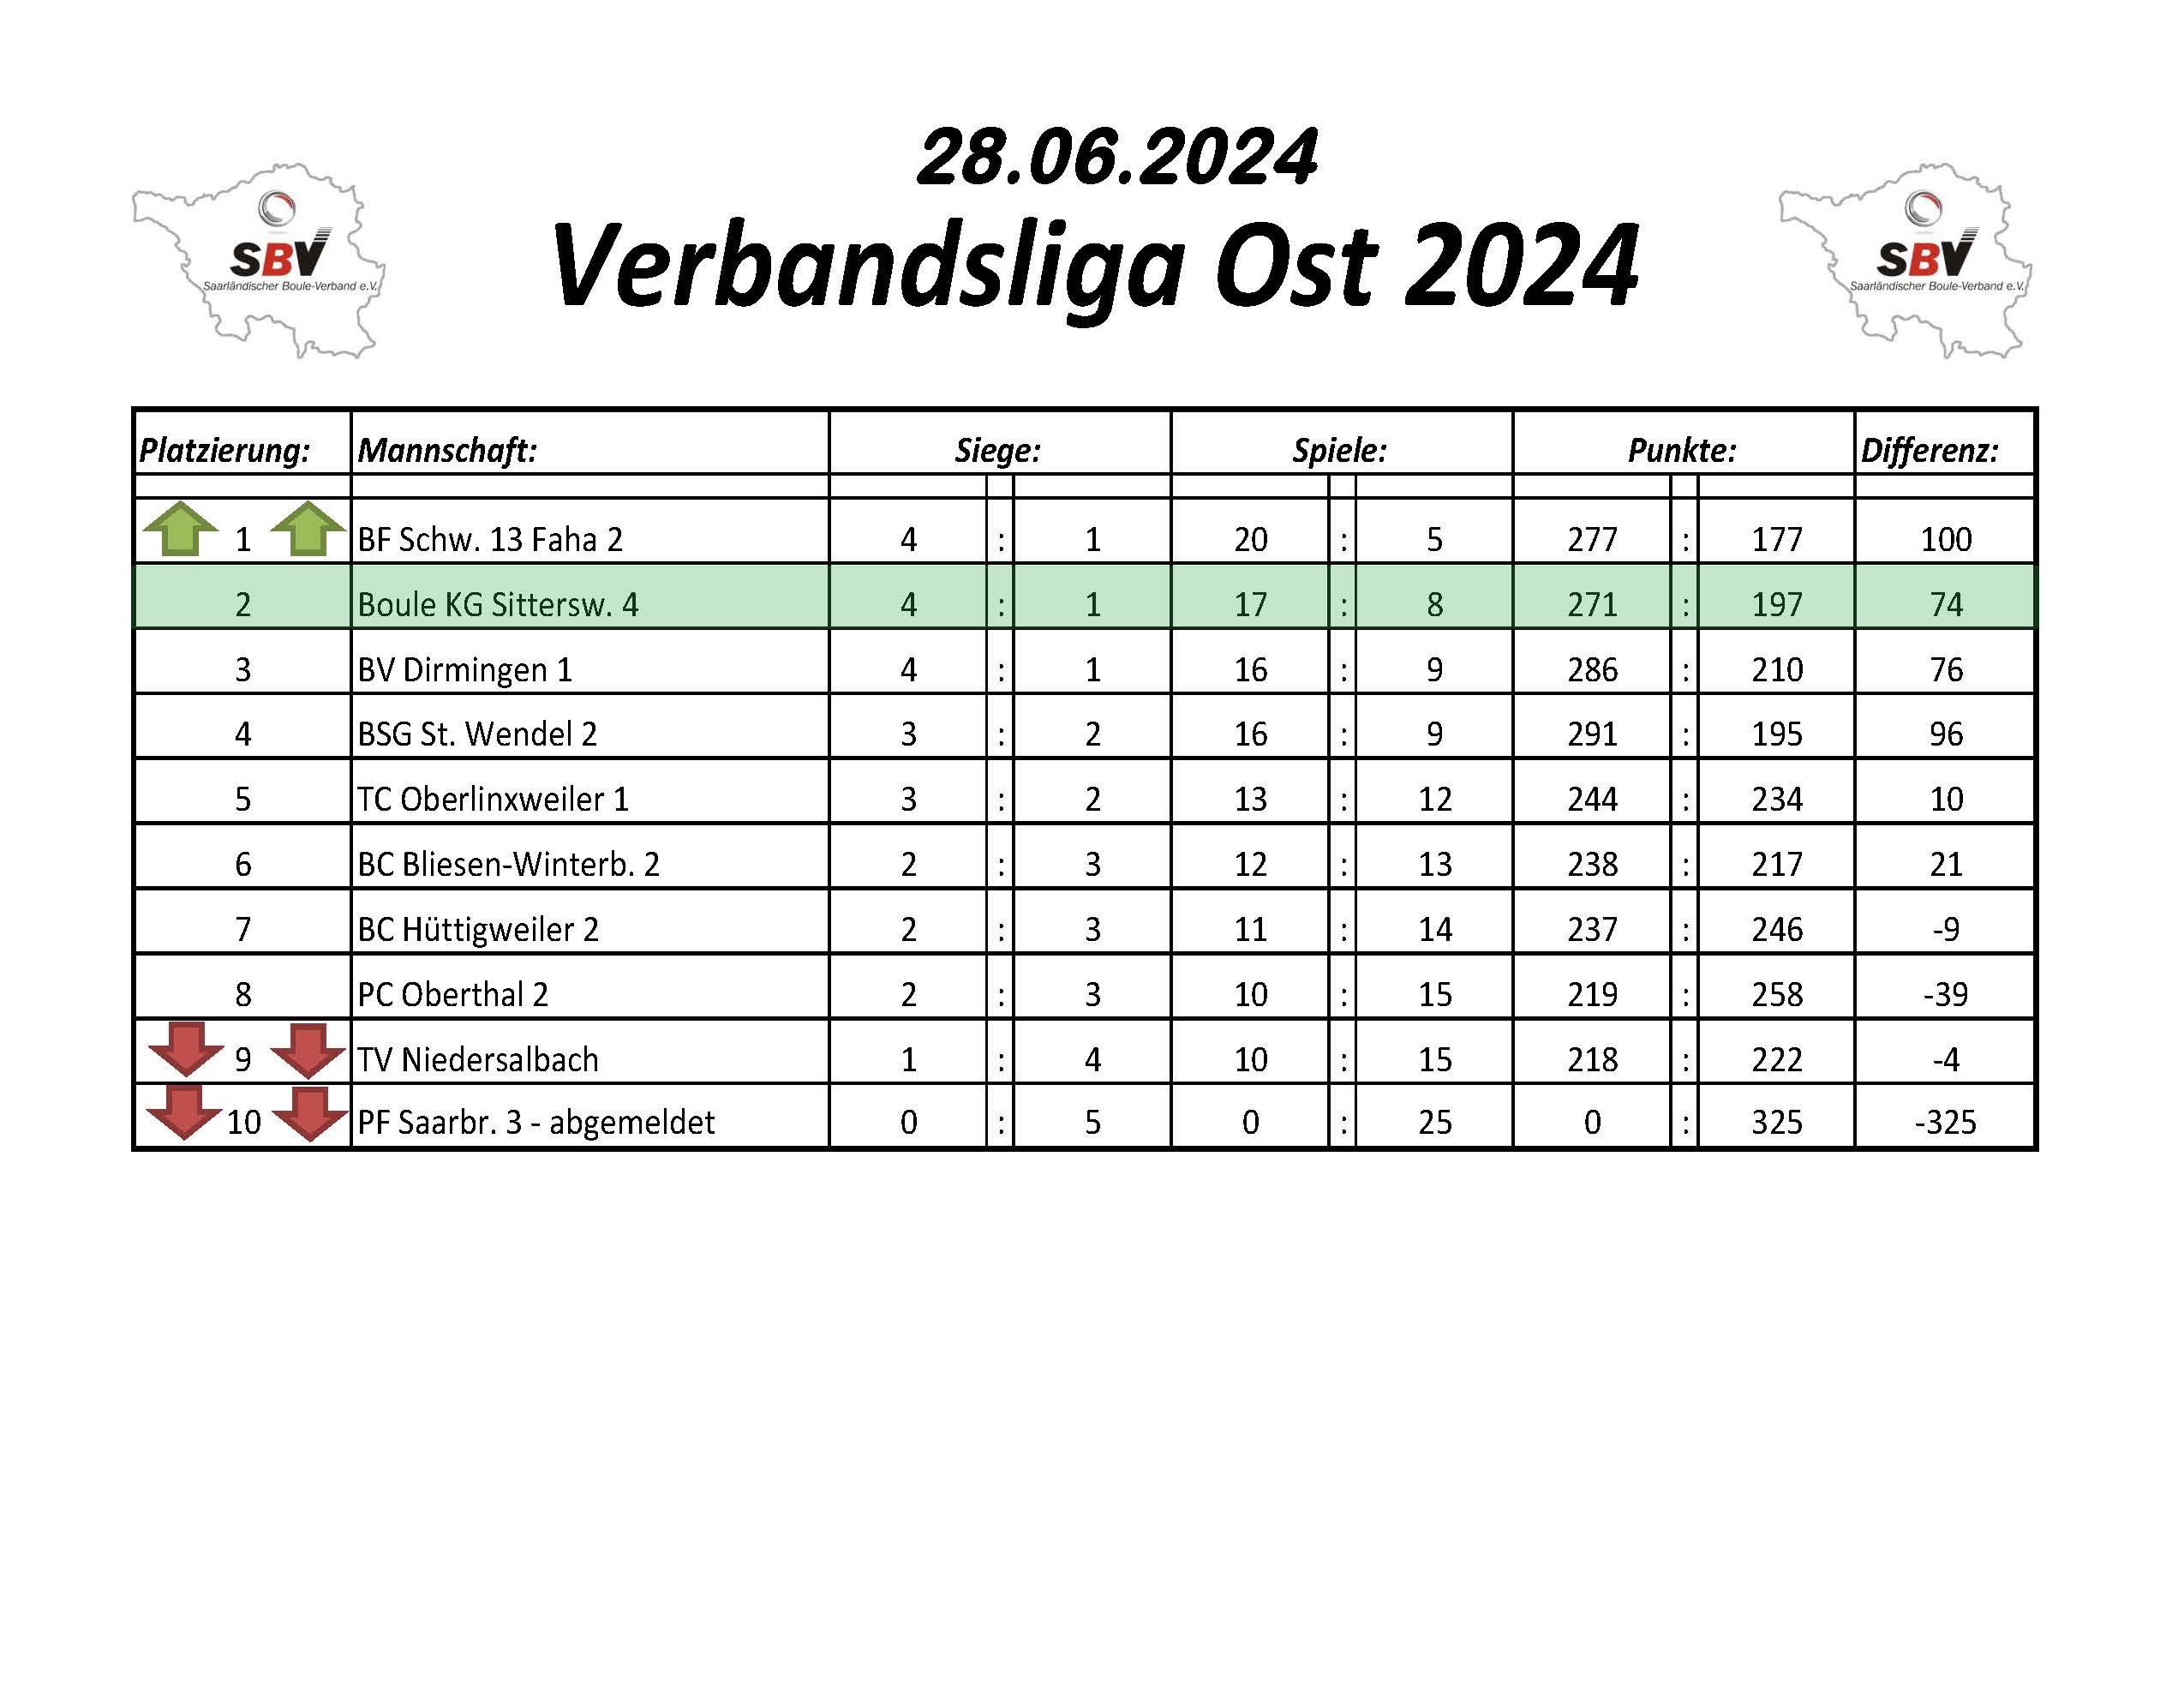 2022 SBV Bezirksliga West Tabelle 2 Spieltag